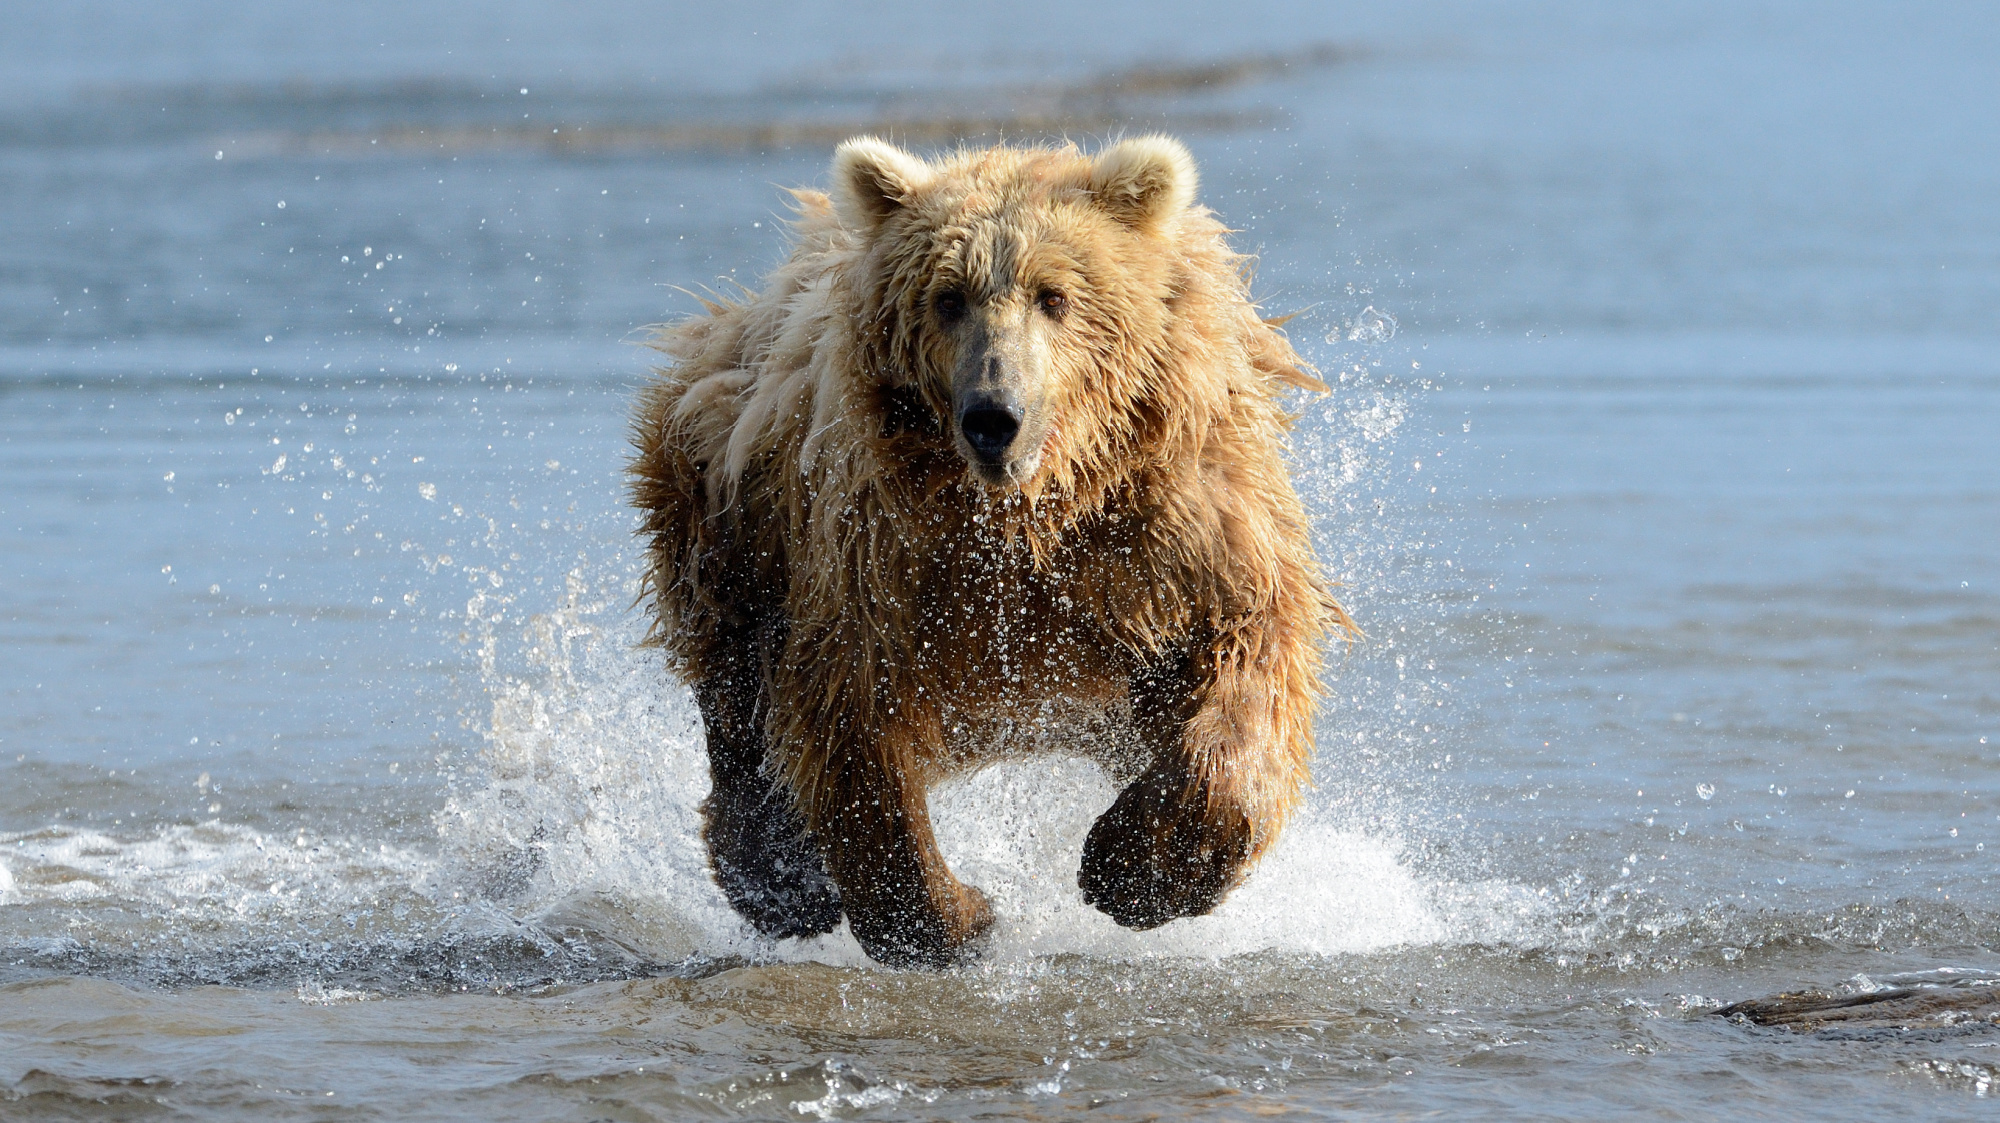 How fast can a bear run?